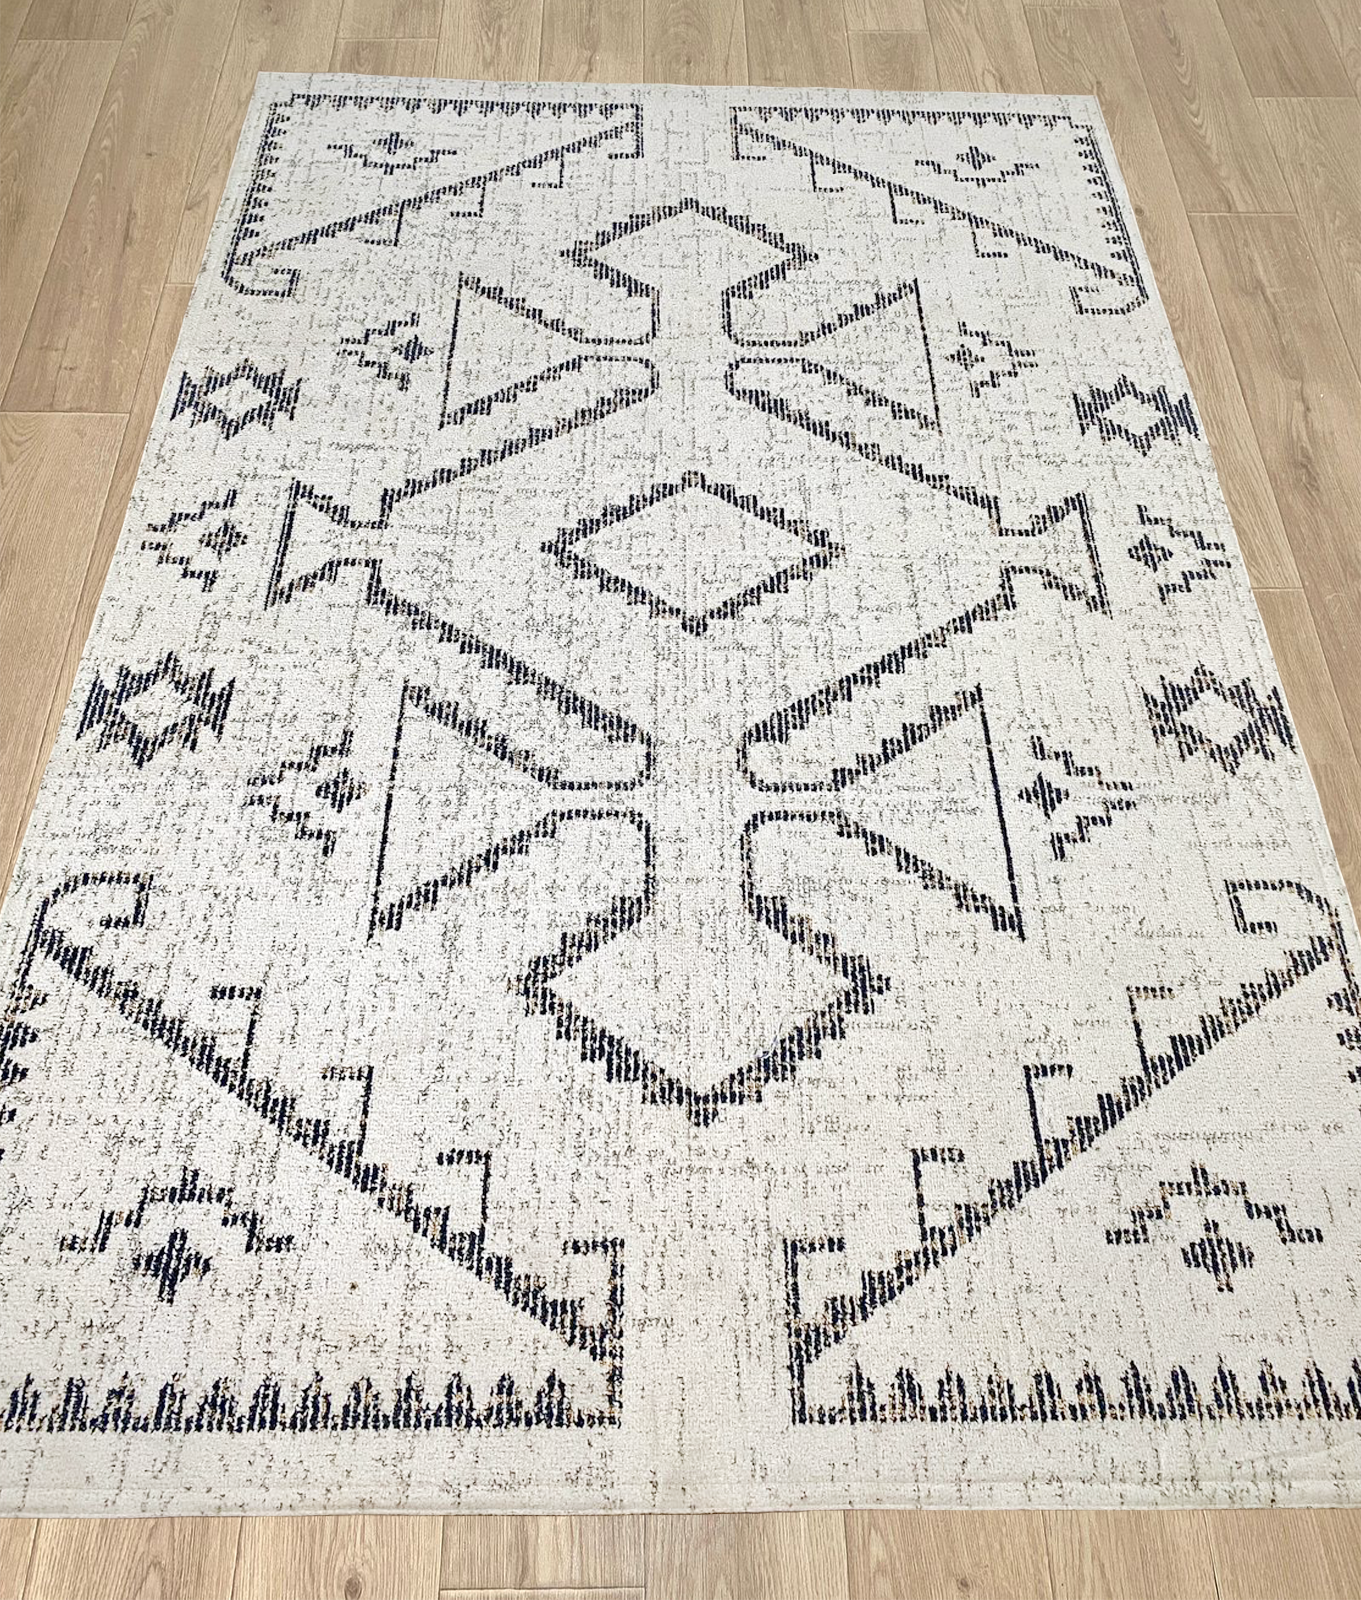 Karpet Bohemian (GW-B-0031) - Grey,Cream